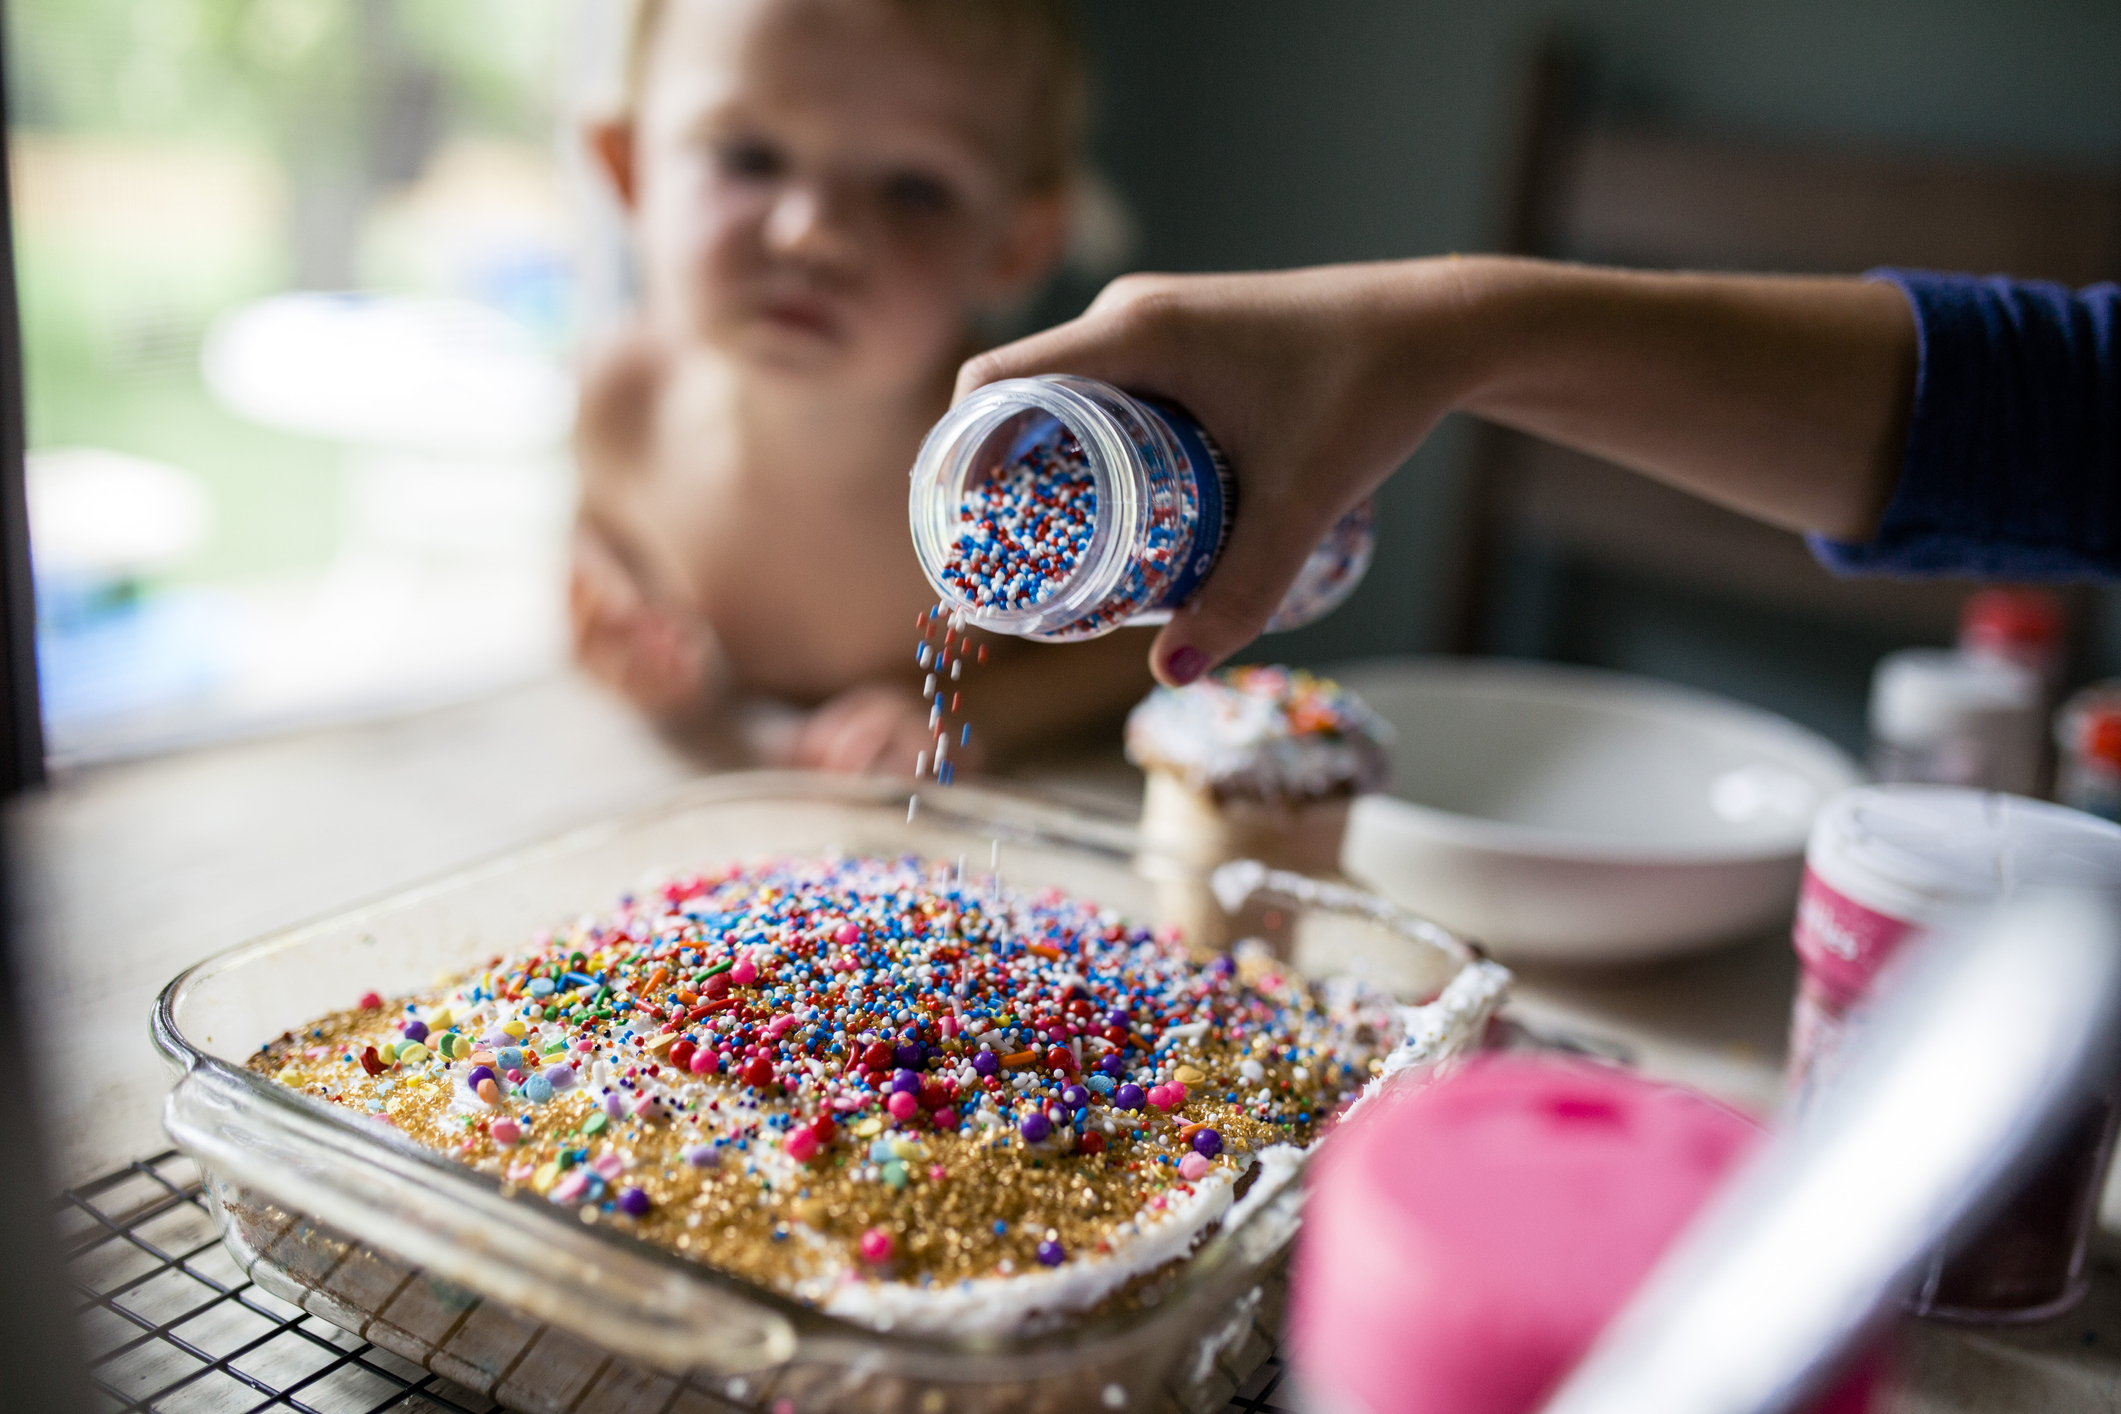 Girl decorating cake with overabundance of sprinkles